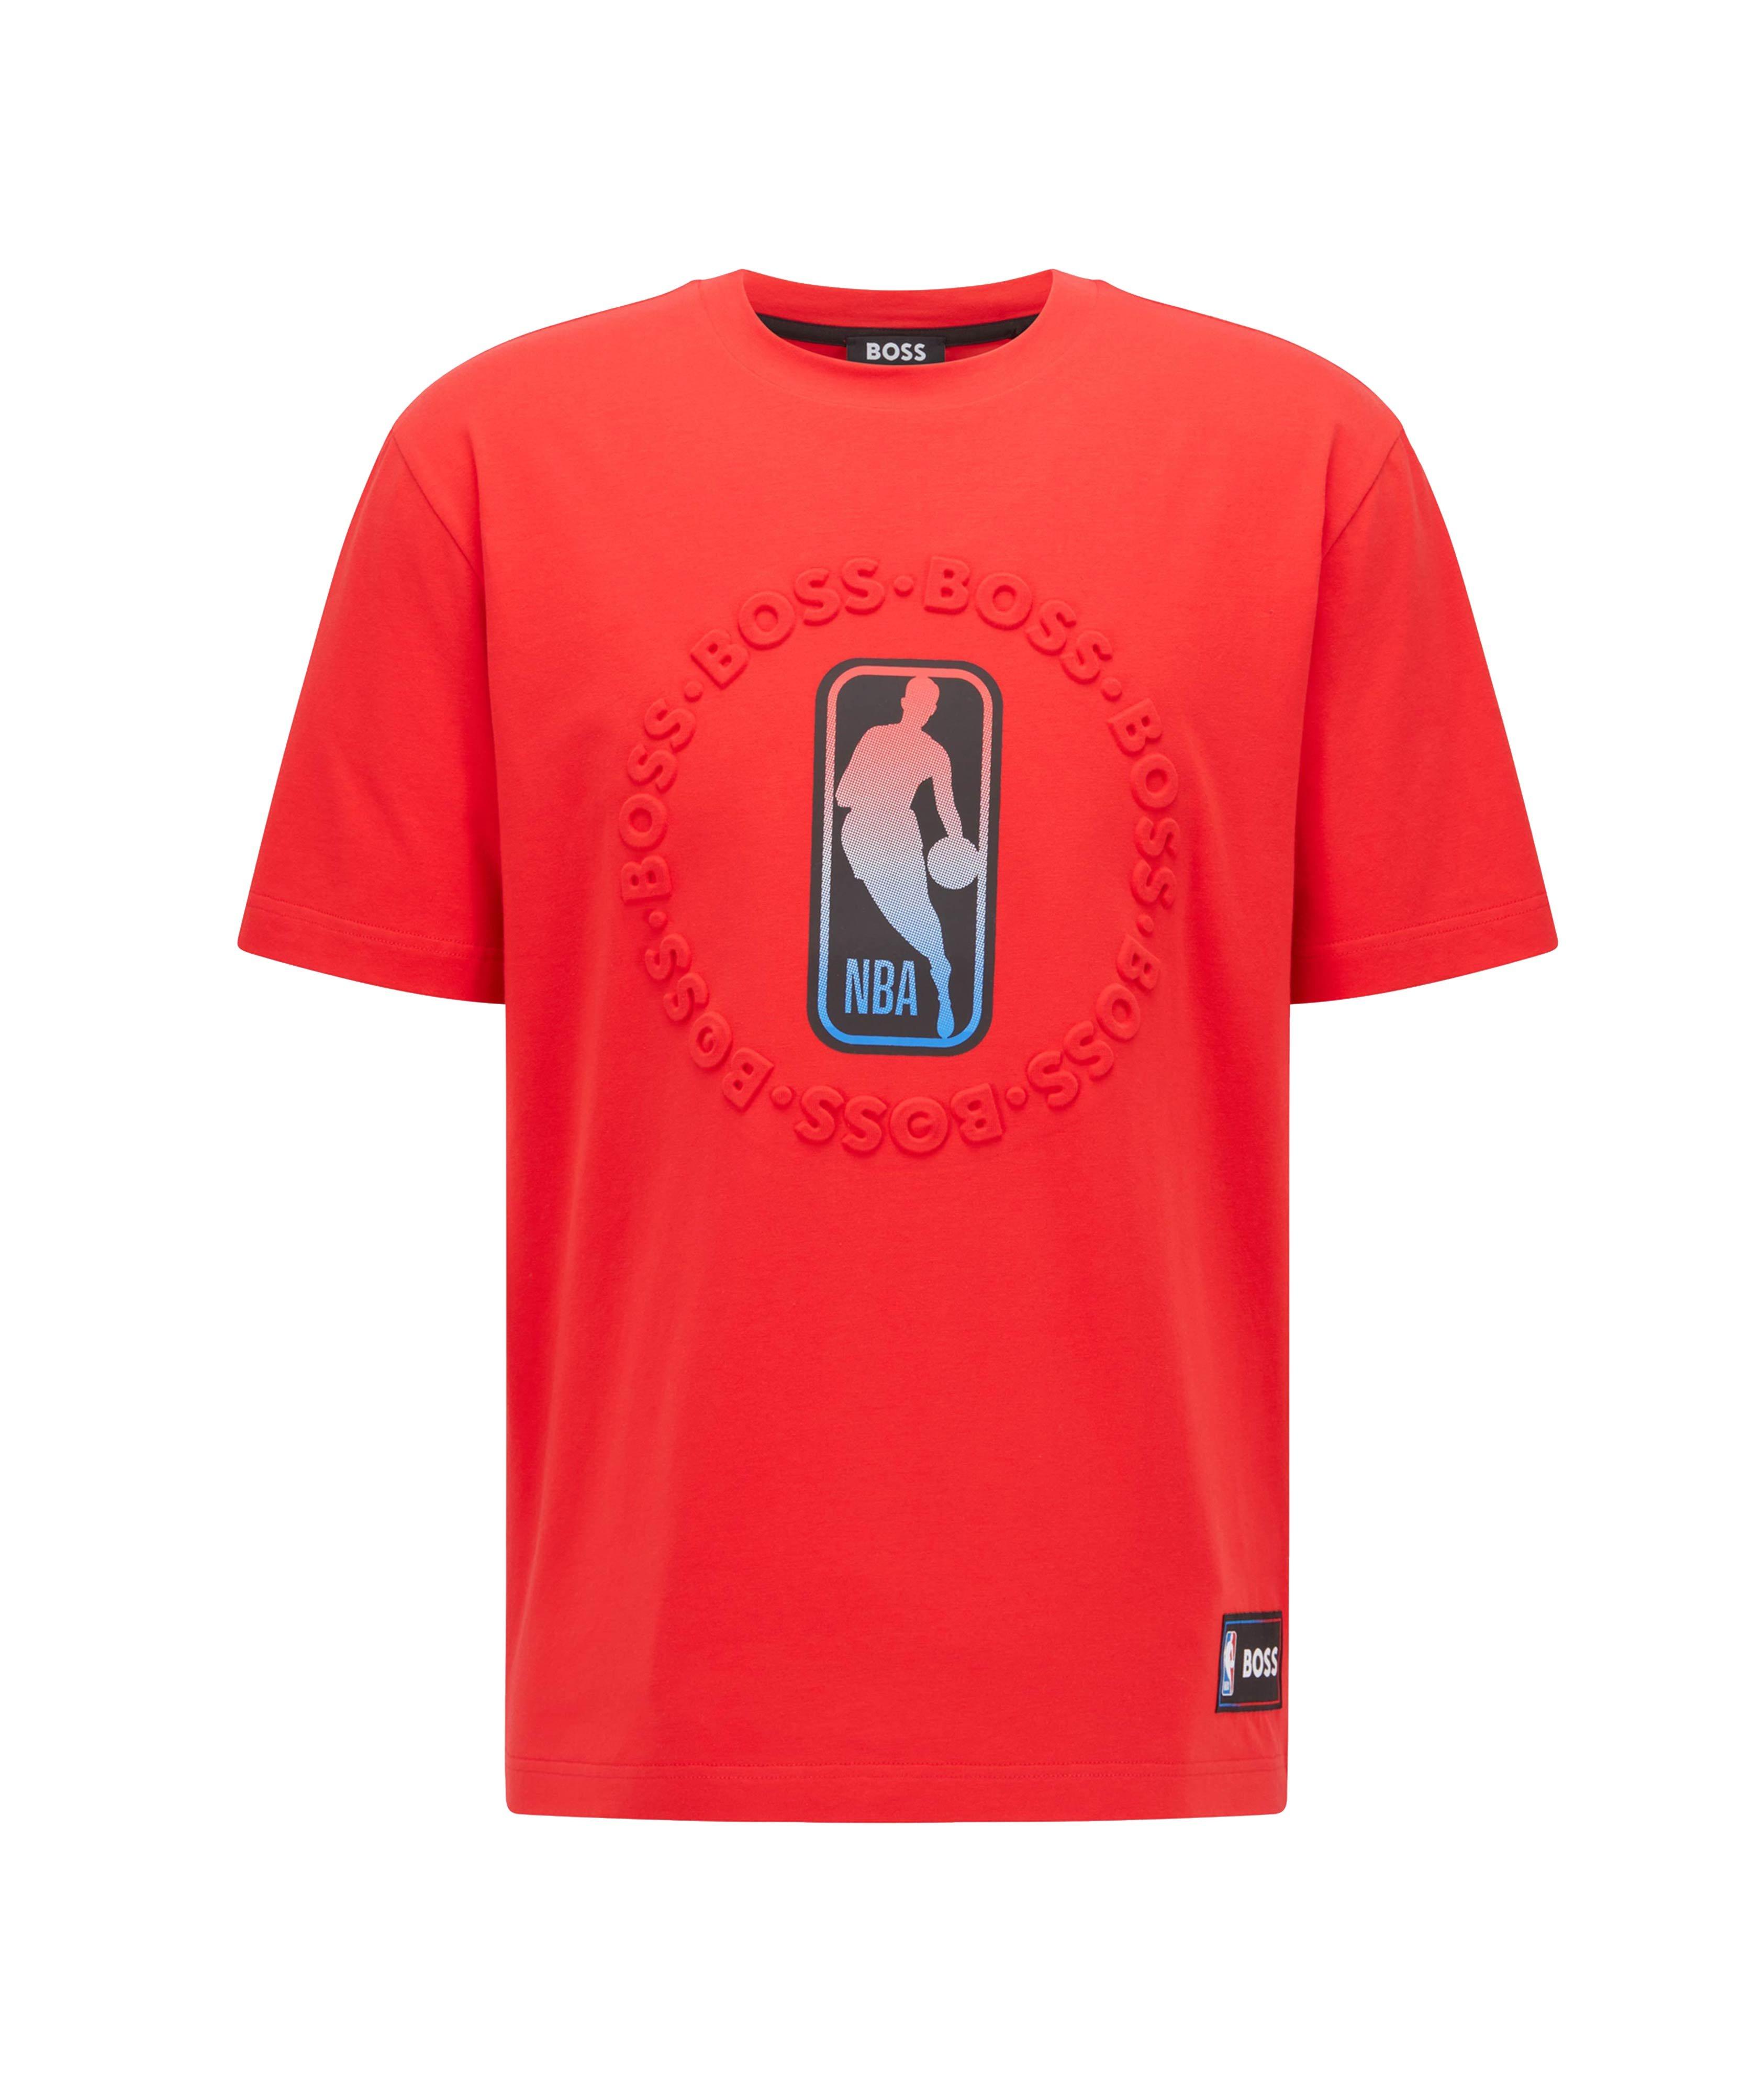 T-shirt avec logos, collection NBA image 0